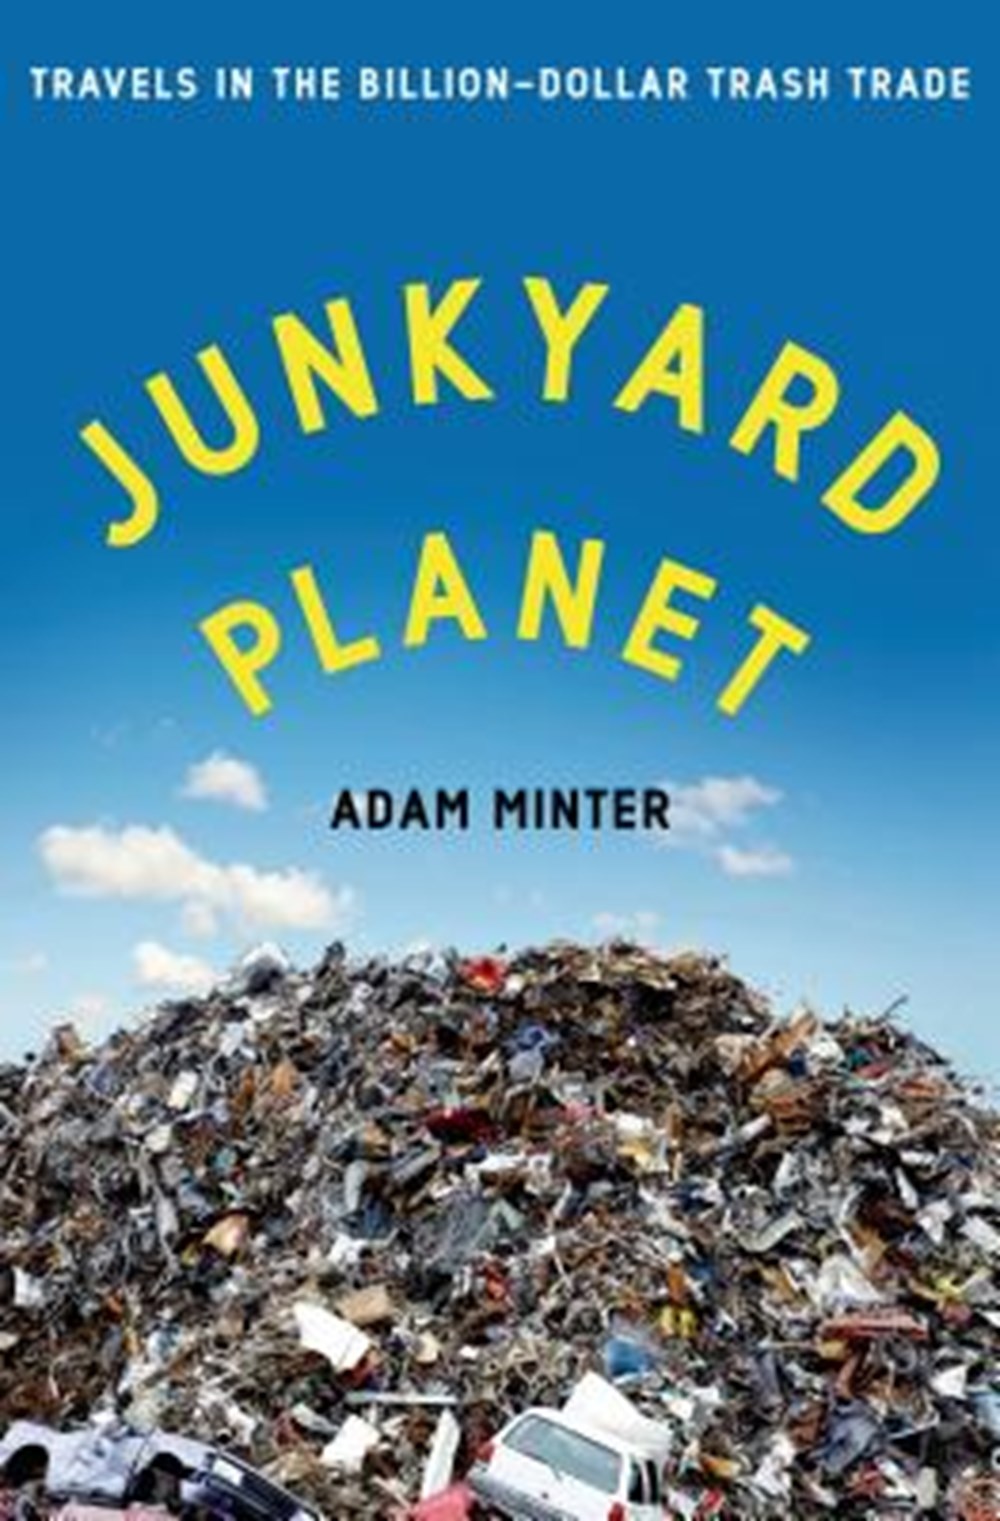 Junkyard Planet Travels in the Billion-Dollar Trash Trade